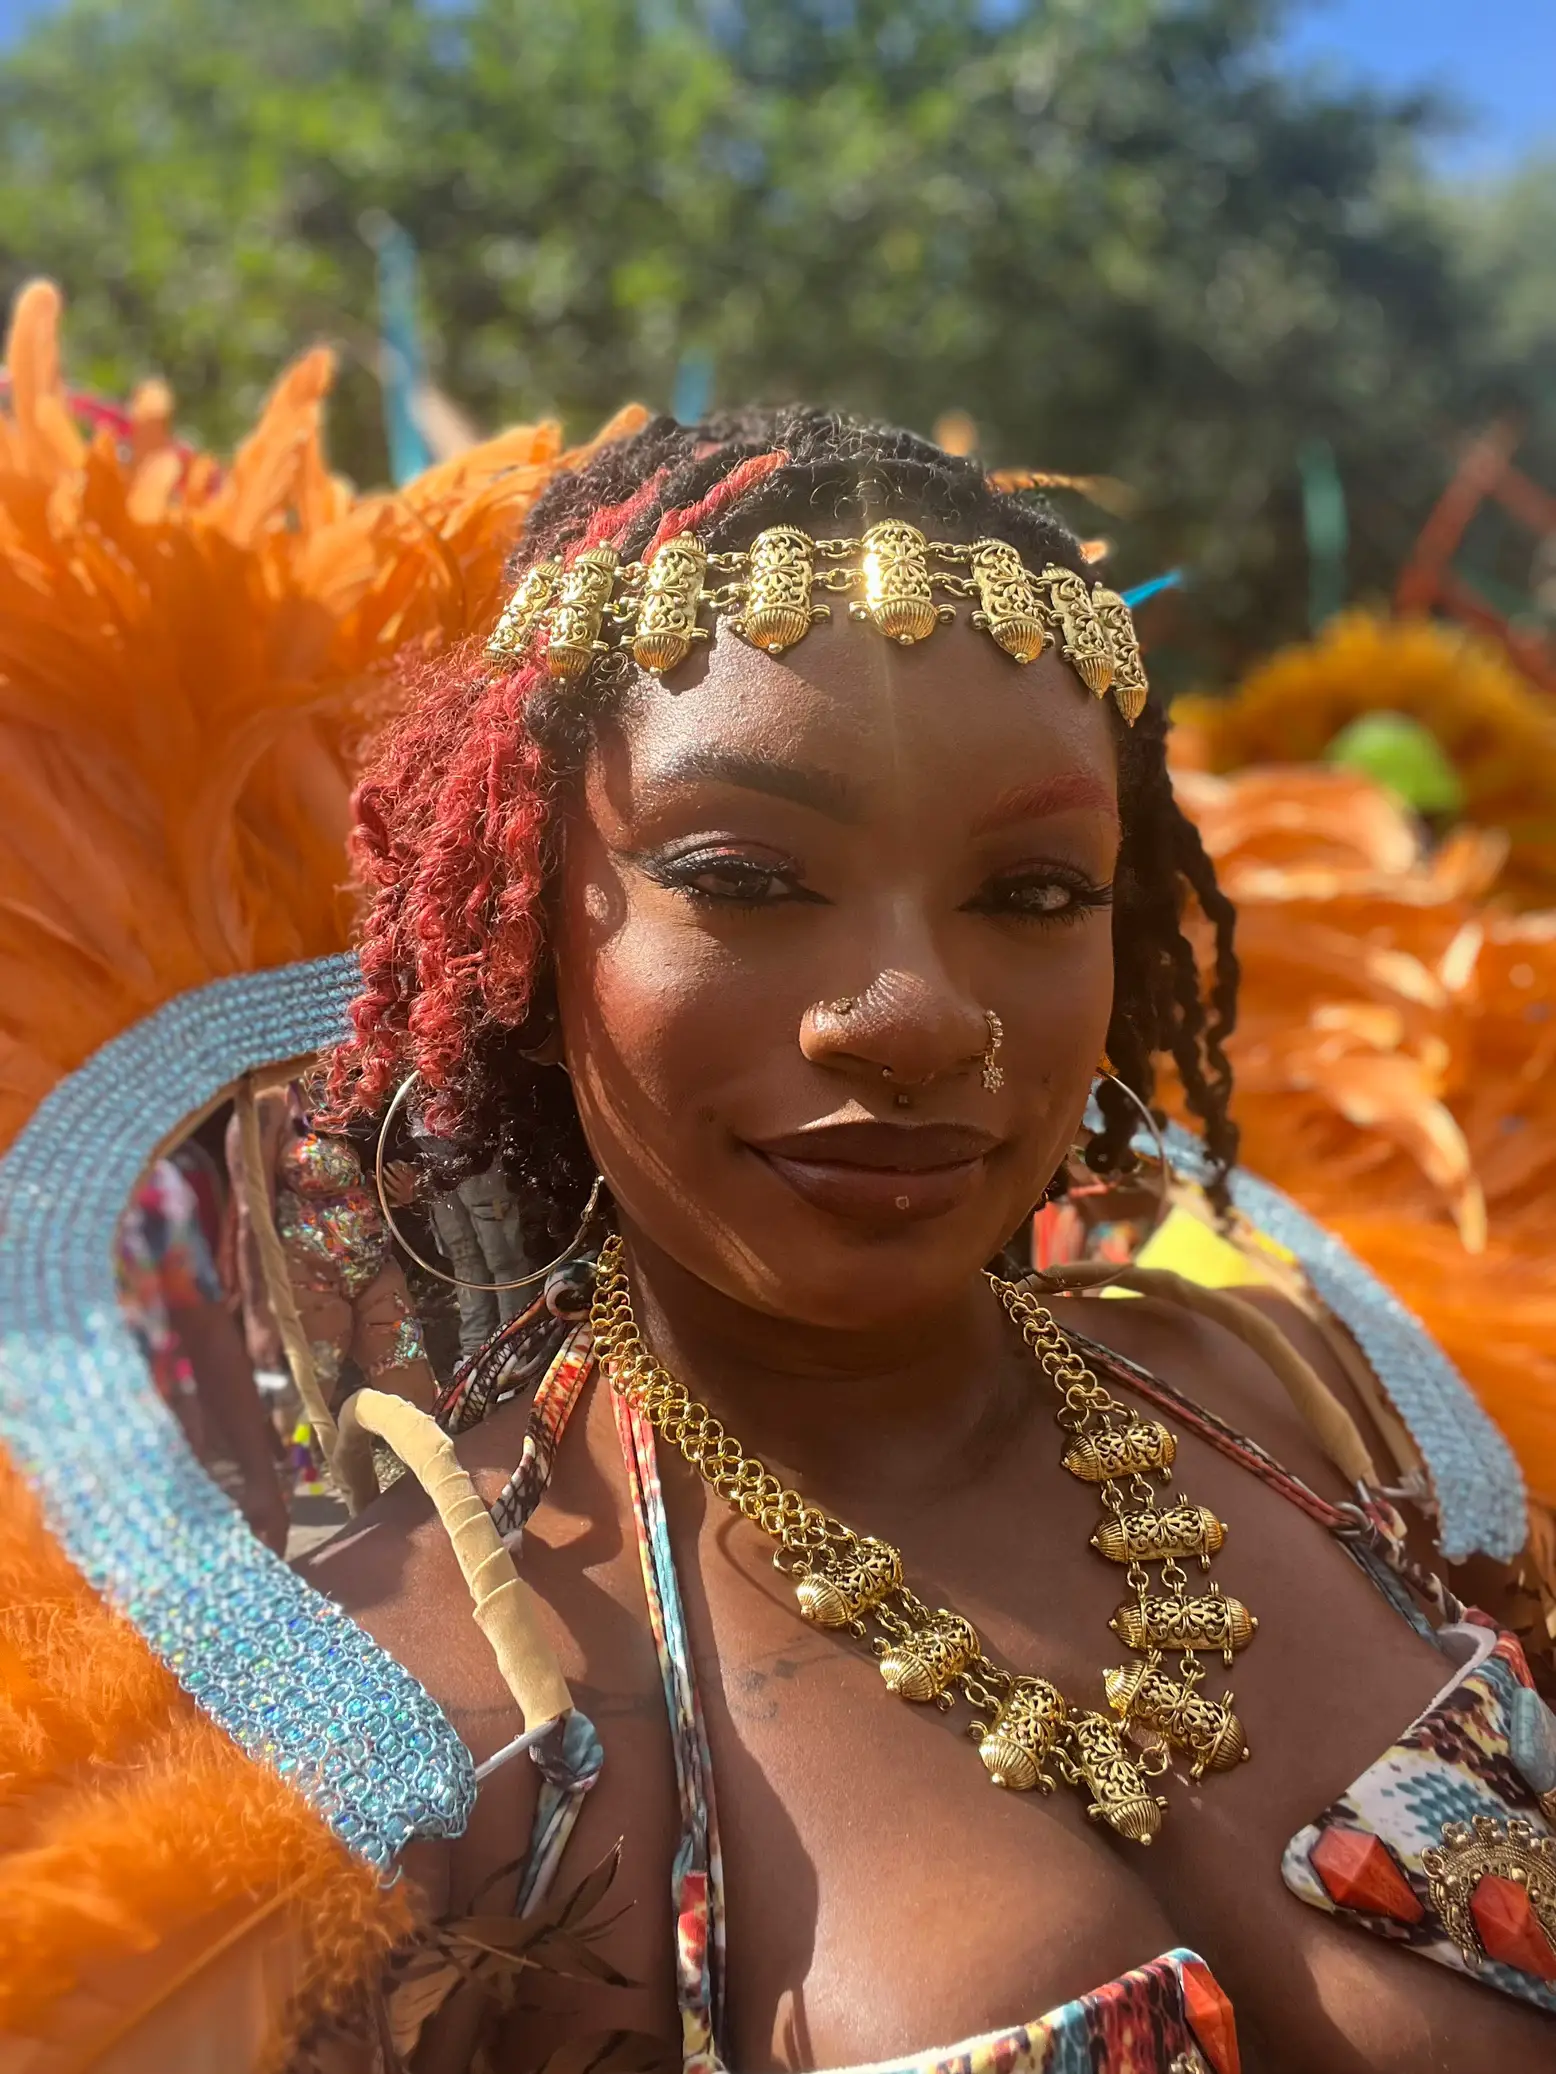 Gold and white carnival wire bra  Carnival outfits, Carnival costumes,  Carribean carnival costumes